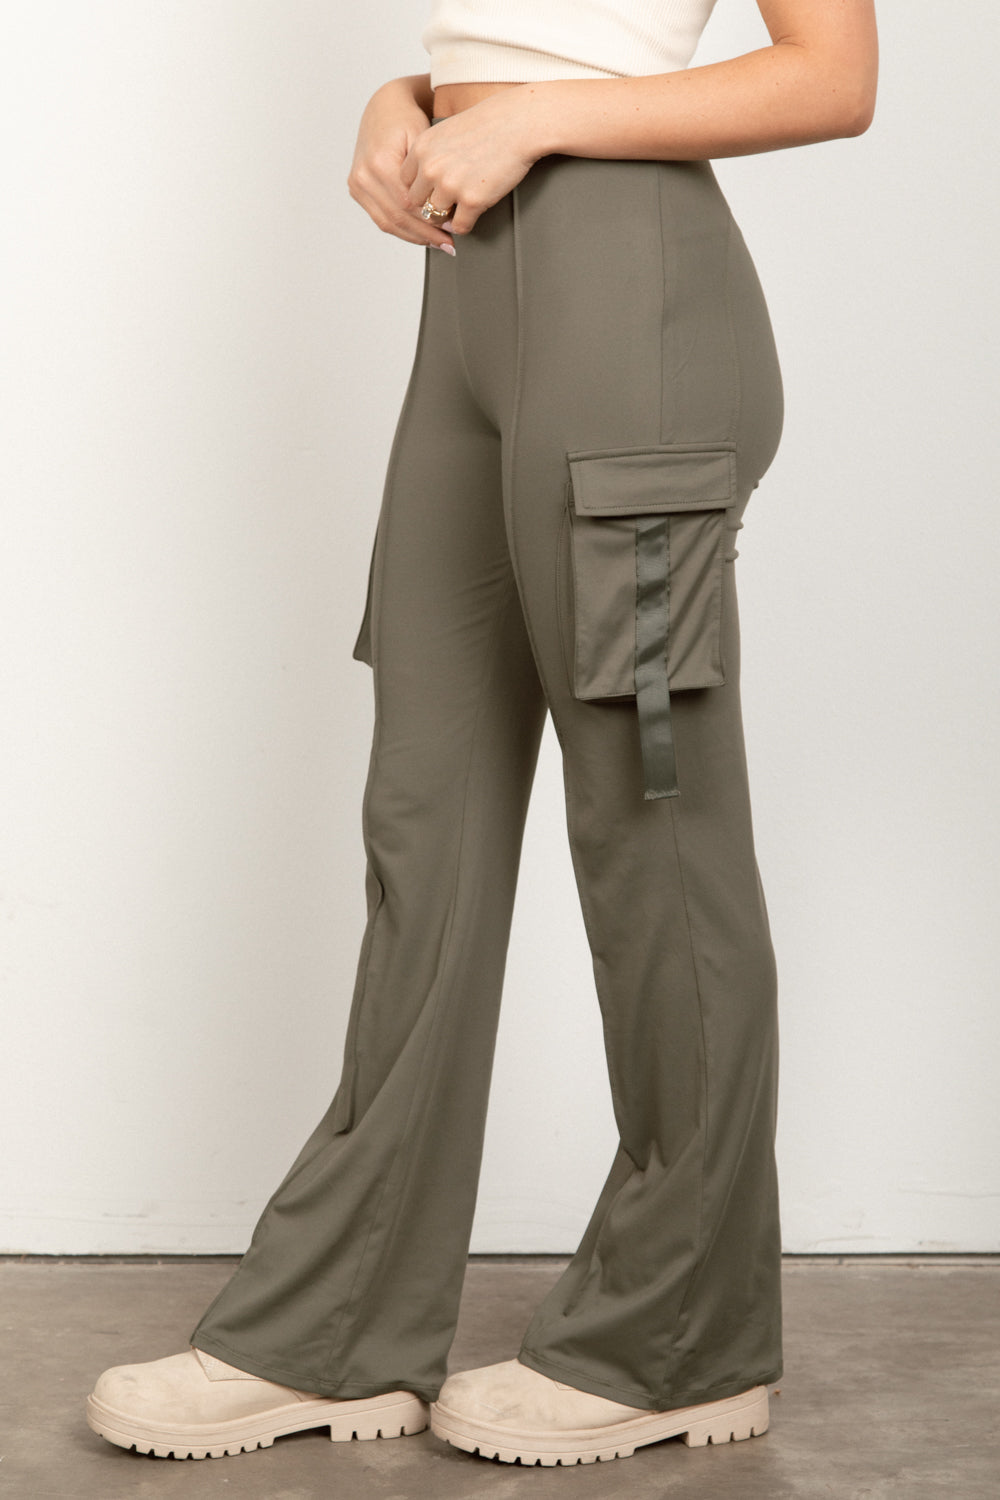 Olive Bootcut Stretchy Knit Cargo Yoga Pants Leggings – Magnolia